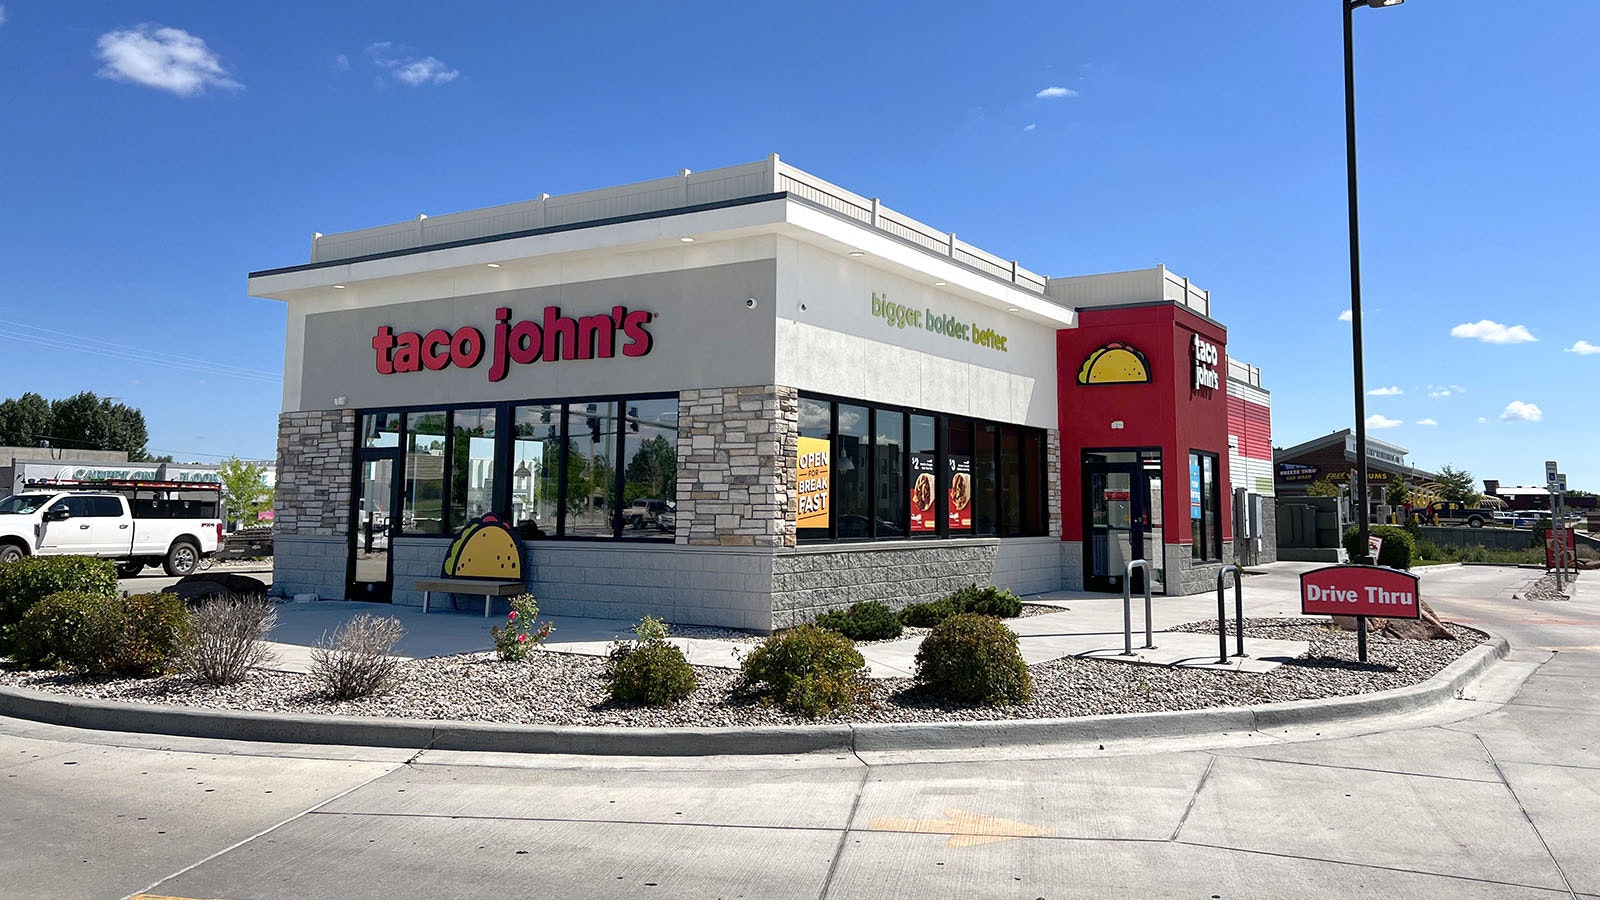 A Taco John's restaurant in Cheyenne, Wyoming.